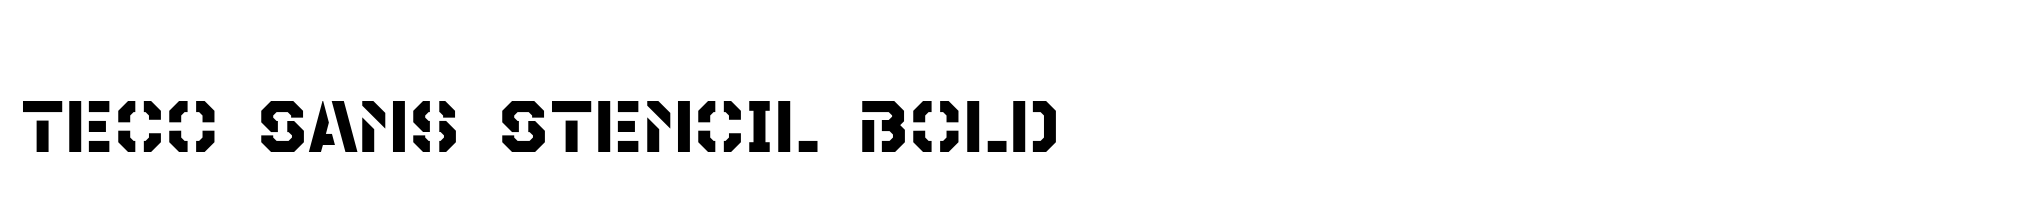 Teco Sans Stencil Bold image